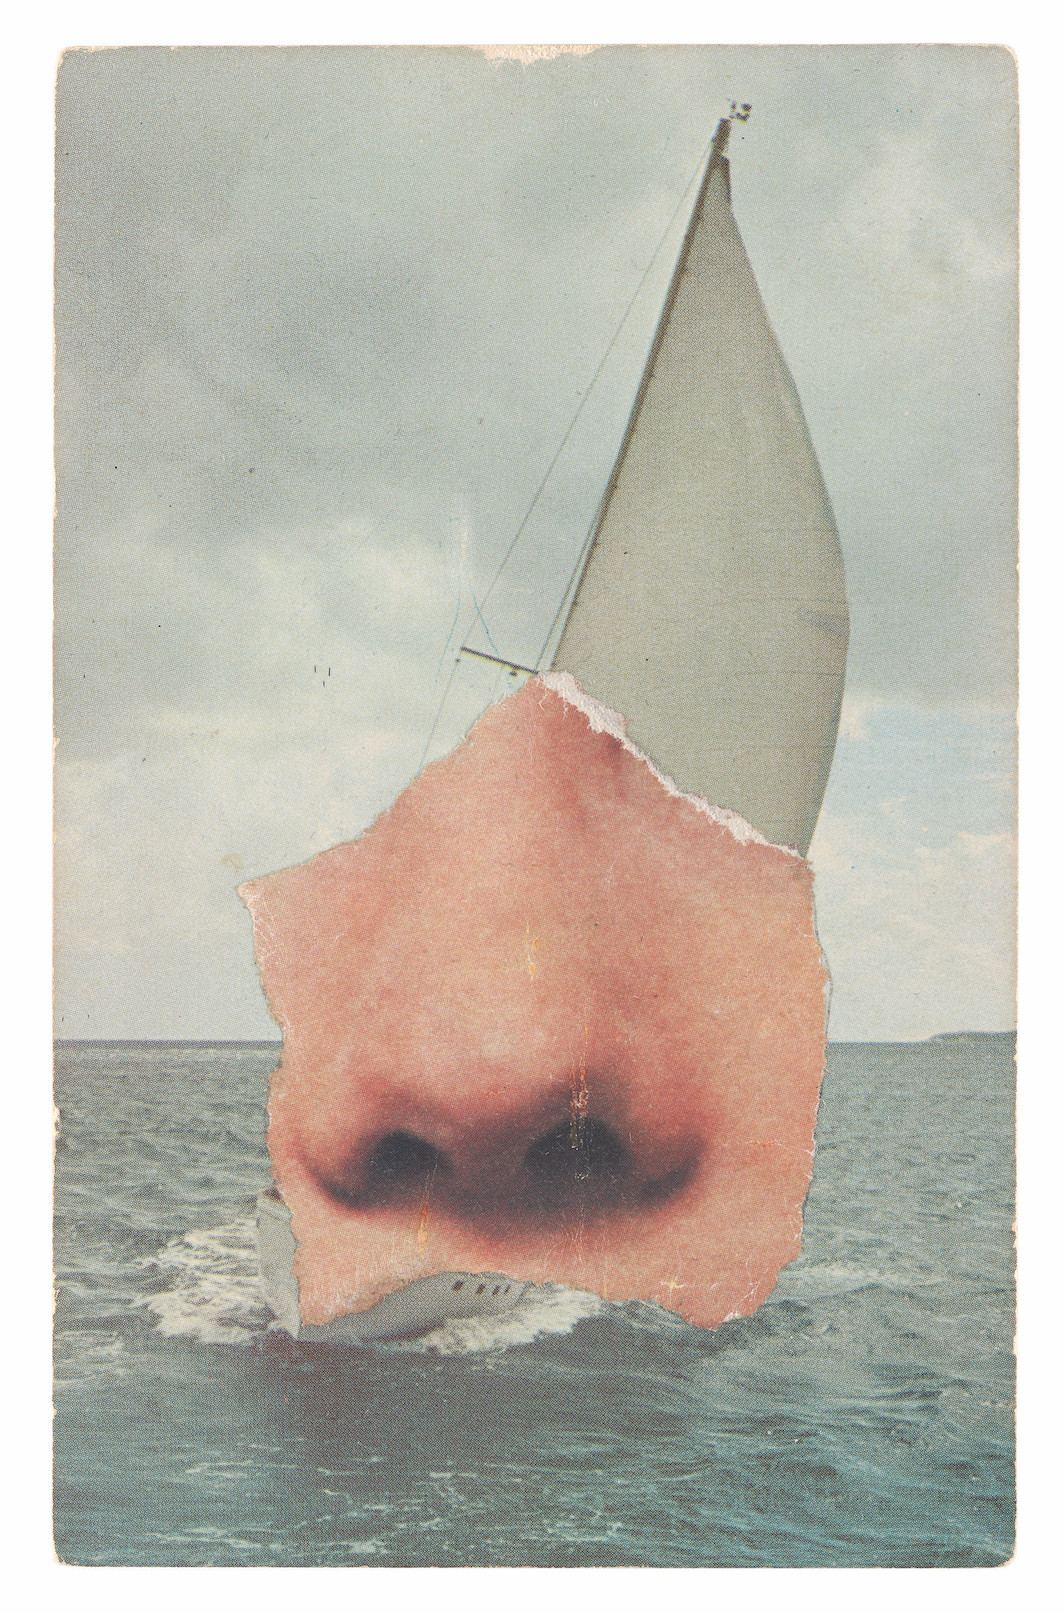 Ellsworth Kelly, Nose/Sailboat, 1974, postcard collage, 5 1/2 x 3 1/2 ". © Ellsworth Kelly Foundation/Collection of Ellsworth Kelly Studio and Jack Shear